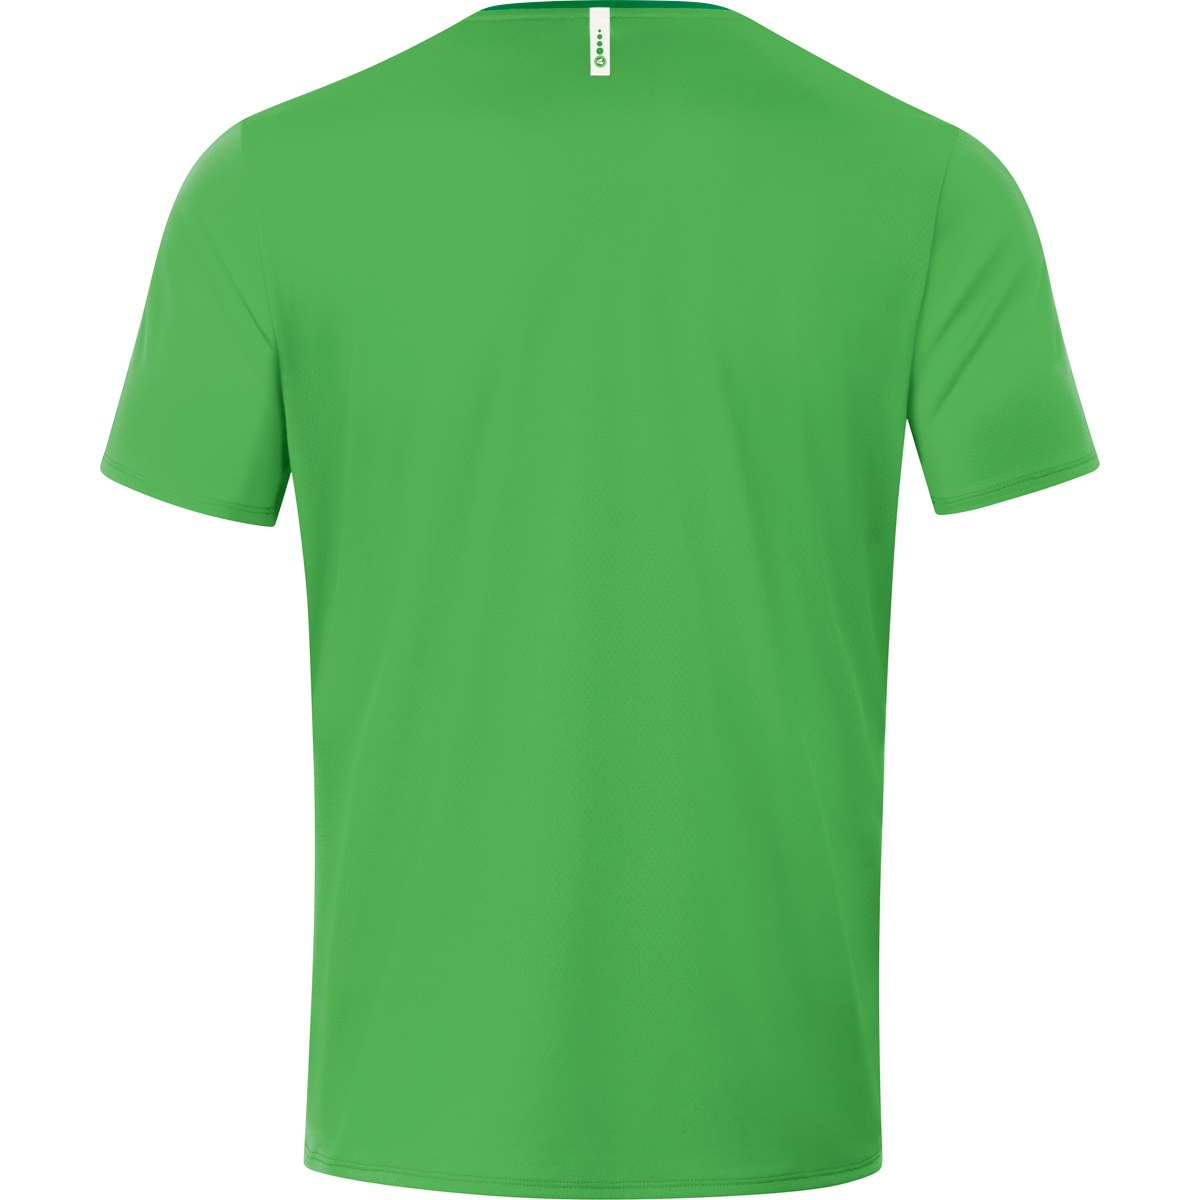 green/sportgrün, JAKO 116, T-Shirt Kinder, Champ 6120 2.0 soft Gr.